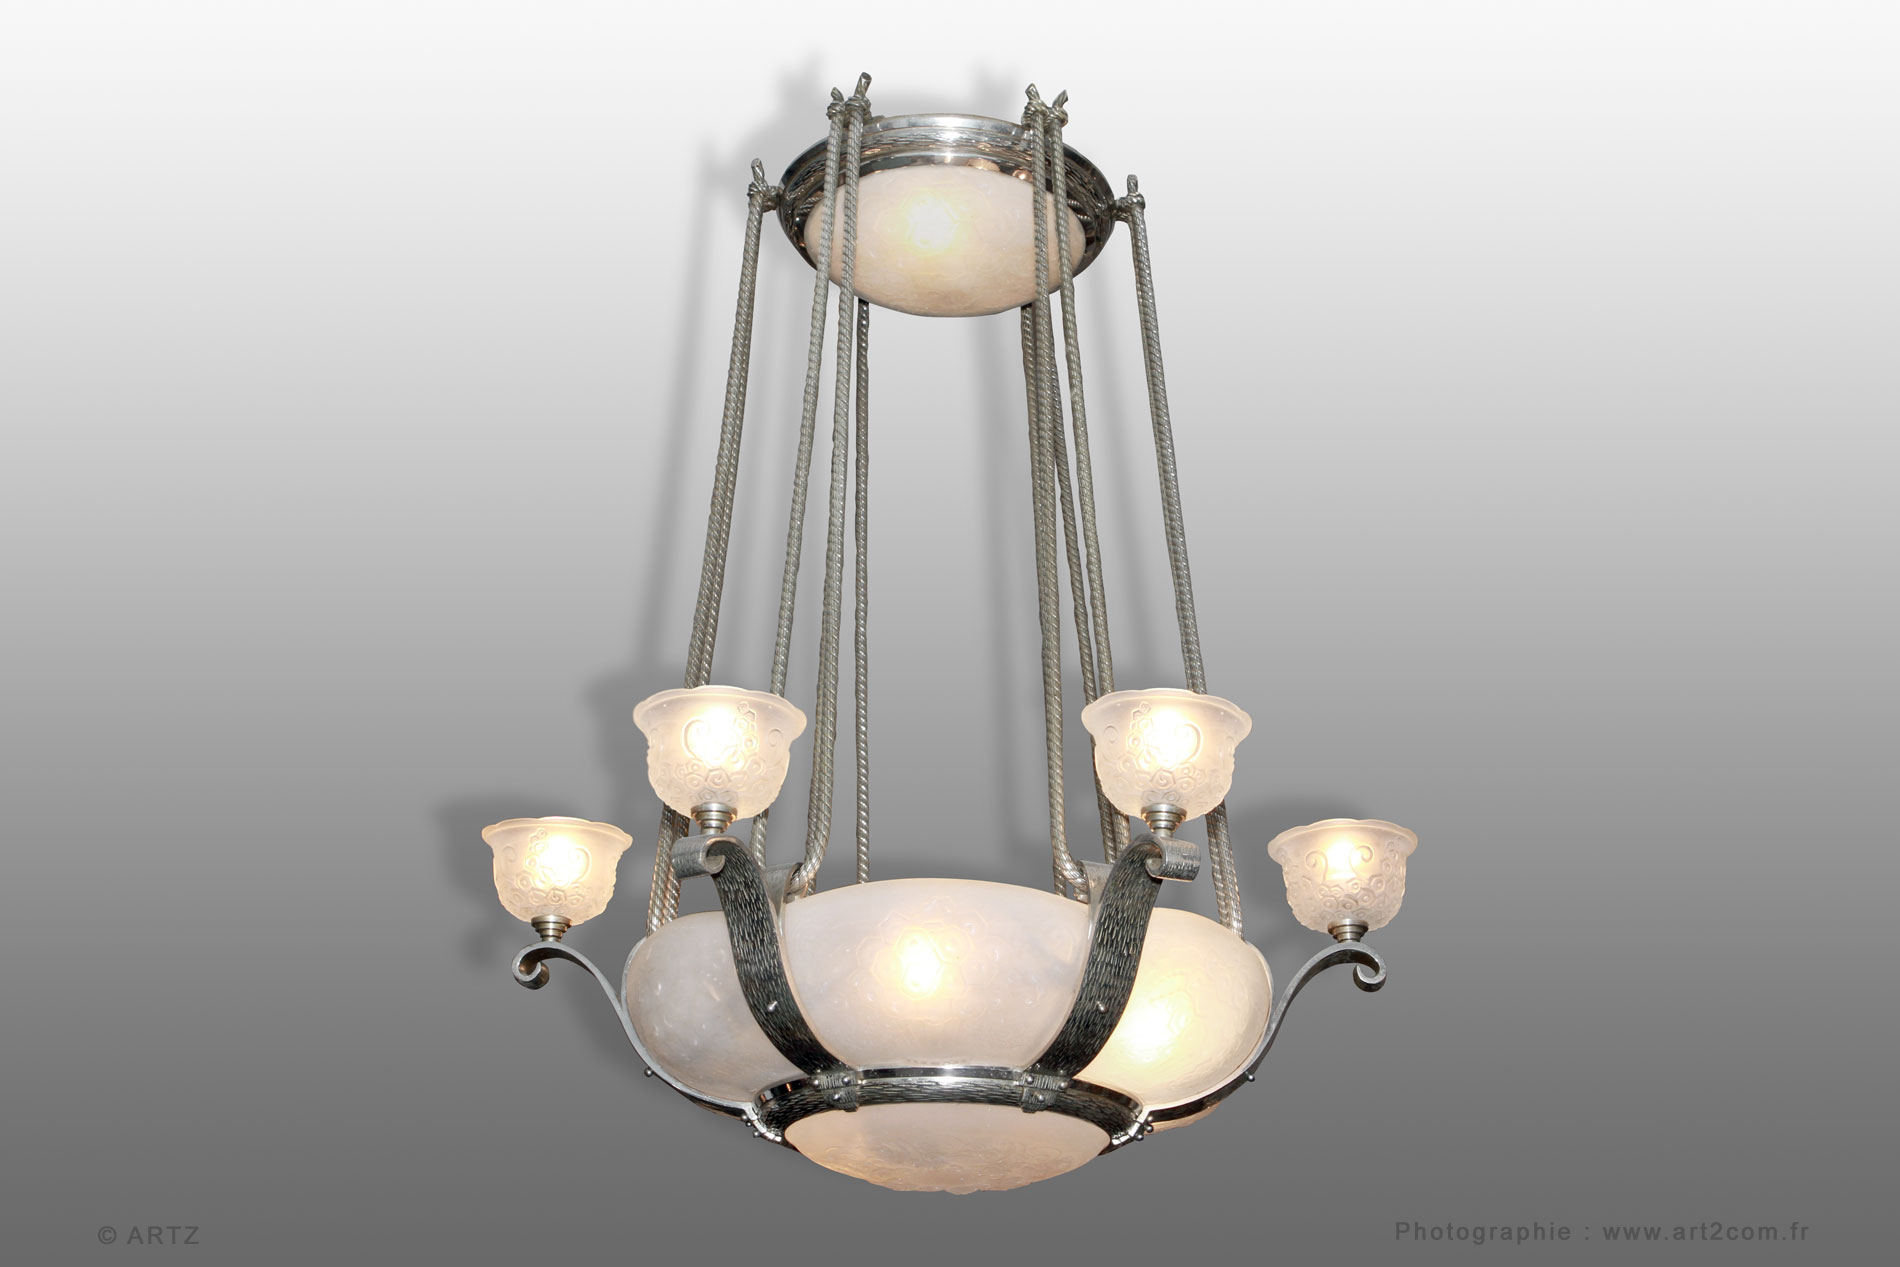 Exceptional chandelier